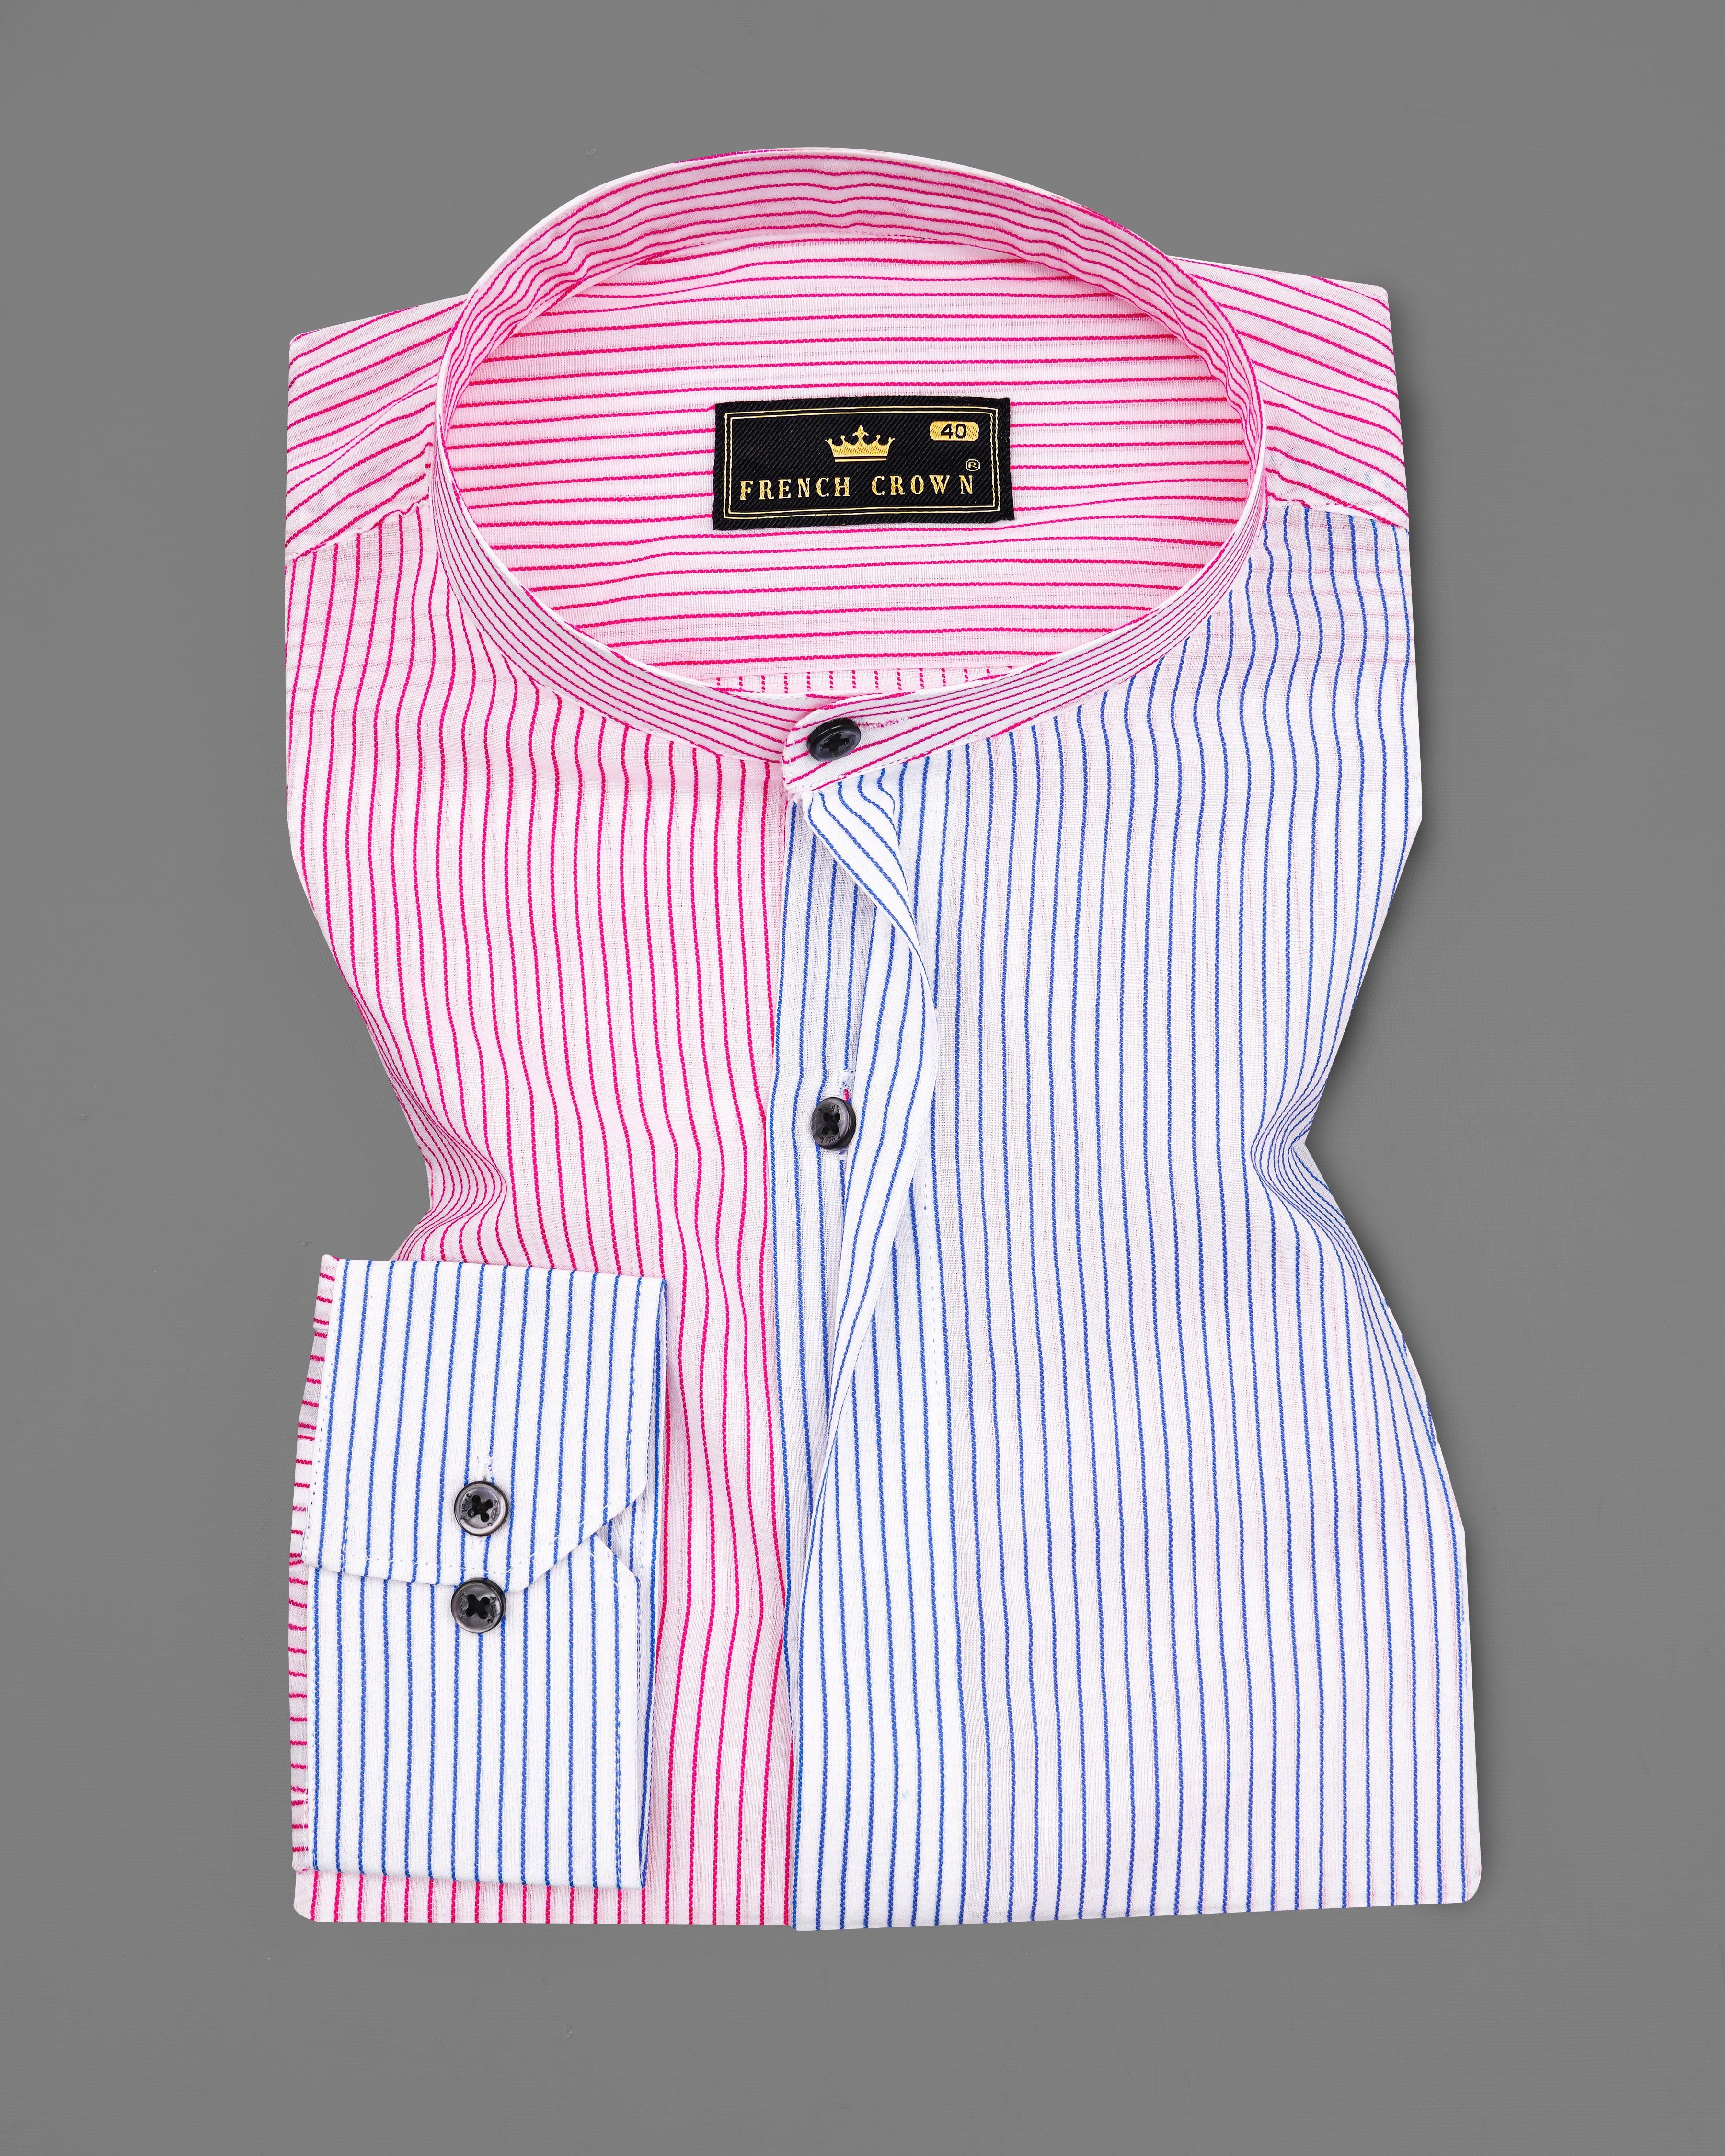 Bright White with Cerise Red and Sapphire Blue Striped Dobby Premium Cotton Designer Shirt 8314-M-BLK-P251 -38,8314-M-BLK-P251 -H-38,8314-M-BLK-P251 -39,8314-M-BLK-P251 -H-39,8314-M-BLK-P251 -40,8314-M-BLK-P251 -H-40,8314-M-BLK-P251 -42,8314-M-BLK-P251 -H-42,8314-M-BLK-P251 -44,8314-M-BLK-P251 -H-44,8314-M-BLK-P251 -46,8314-M-BLK-P251 -H-46,8314-M-BLK-P251 -48,8314-M-BLK-P251 -H-48,8314-M-BLK-P251 -50,8314-M-BLK-P251 -H-50,8314-M-BLK-P251 -52,8314-M-BLK-P251 -H-52